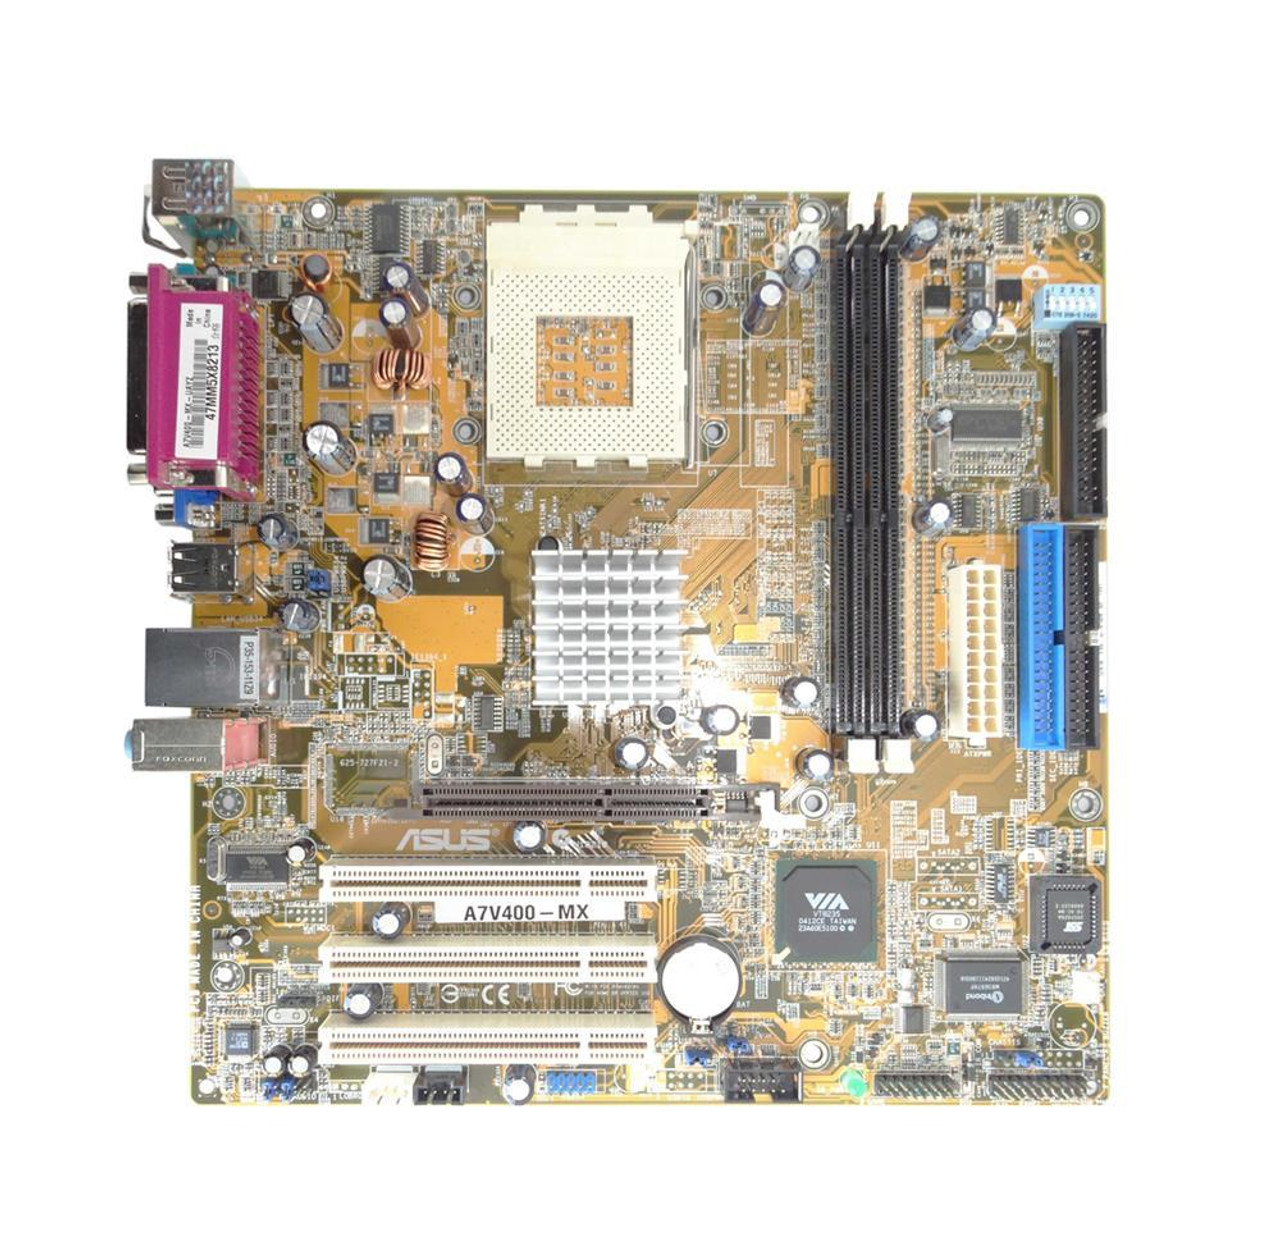 A7V400-MXSE ASUS Socket 462(A) VIA KM400A Chipset micro-ATX Motherboard (Refurbished)